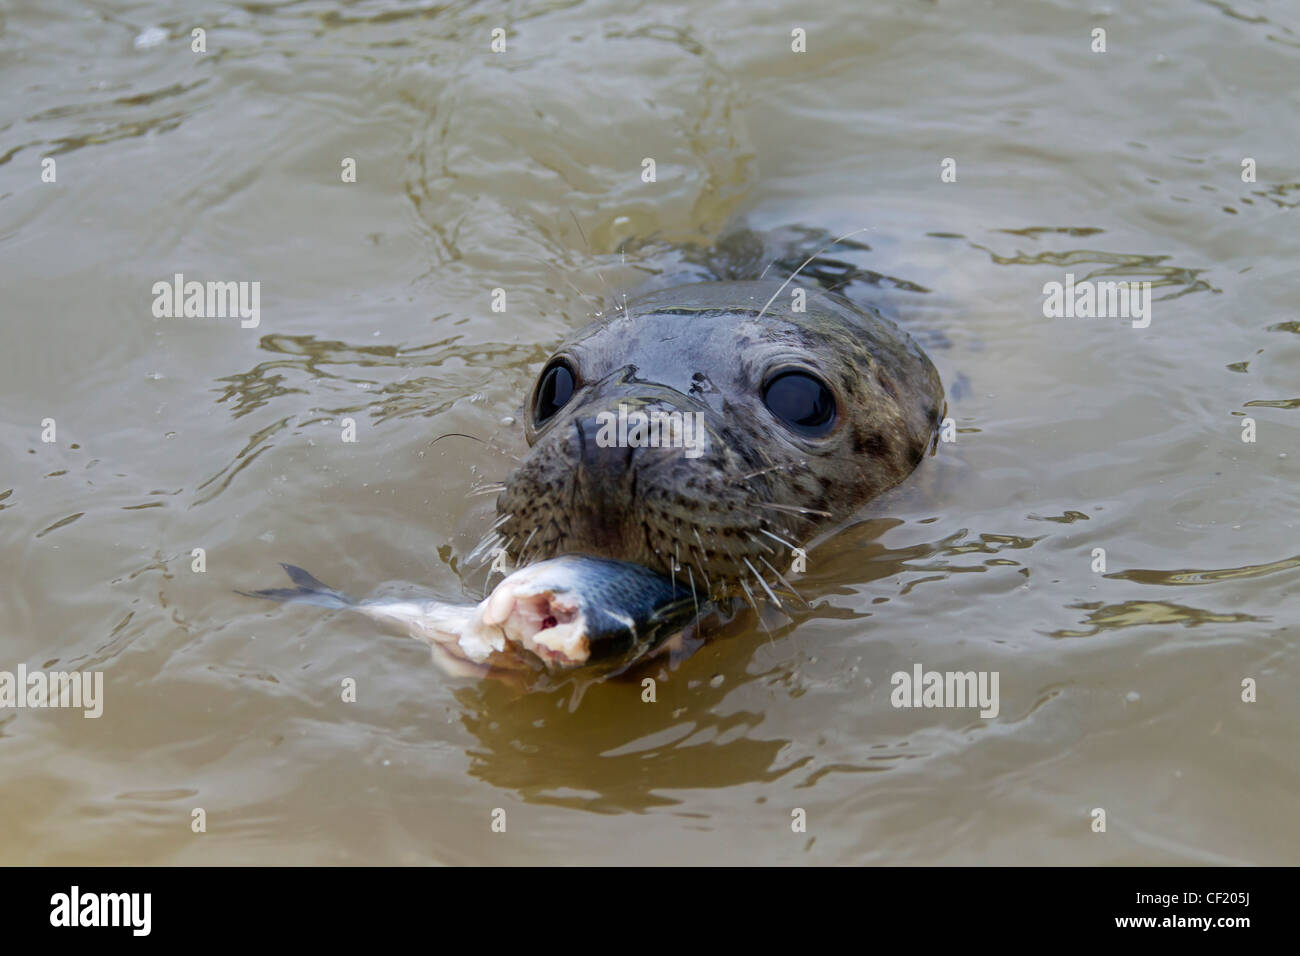 Juvenile Grey seal / gray seal (Halichoerus grypus) eating fish at the seal rehabilitation centre Friedrichskoog, Germany Stock Photo